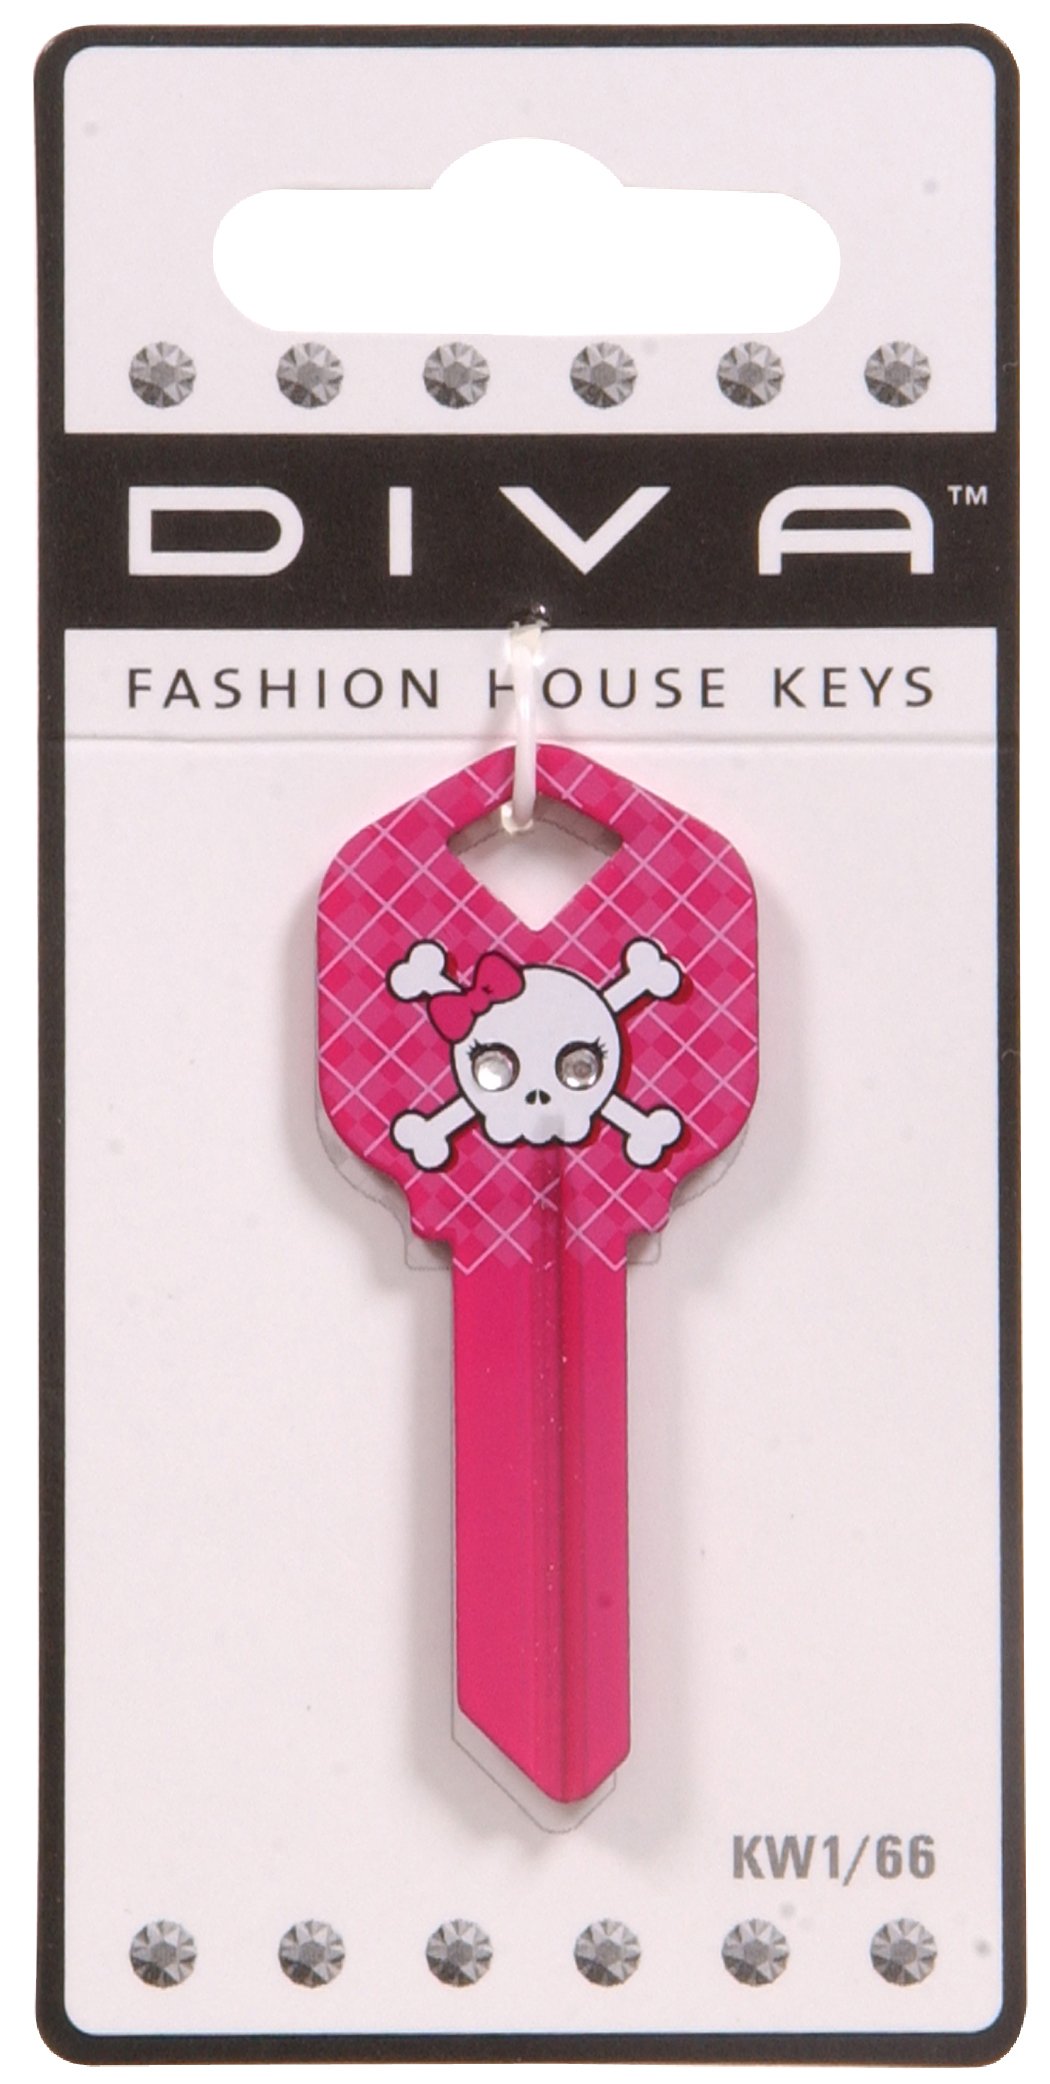 The Hillman Diva Fashion Skull Key - Shop Home Improvement at H-E-B